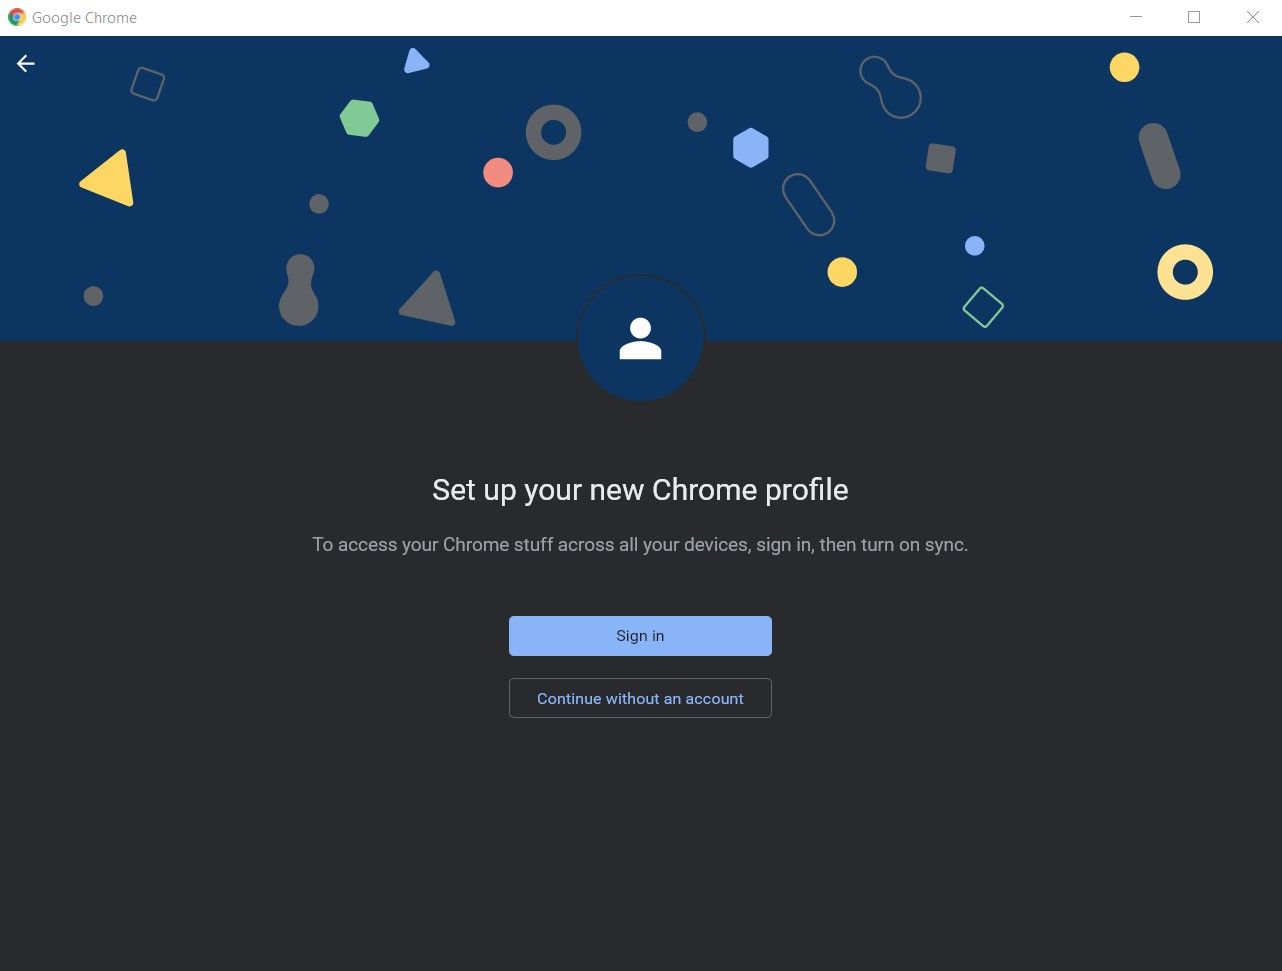 Chrome profiles